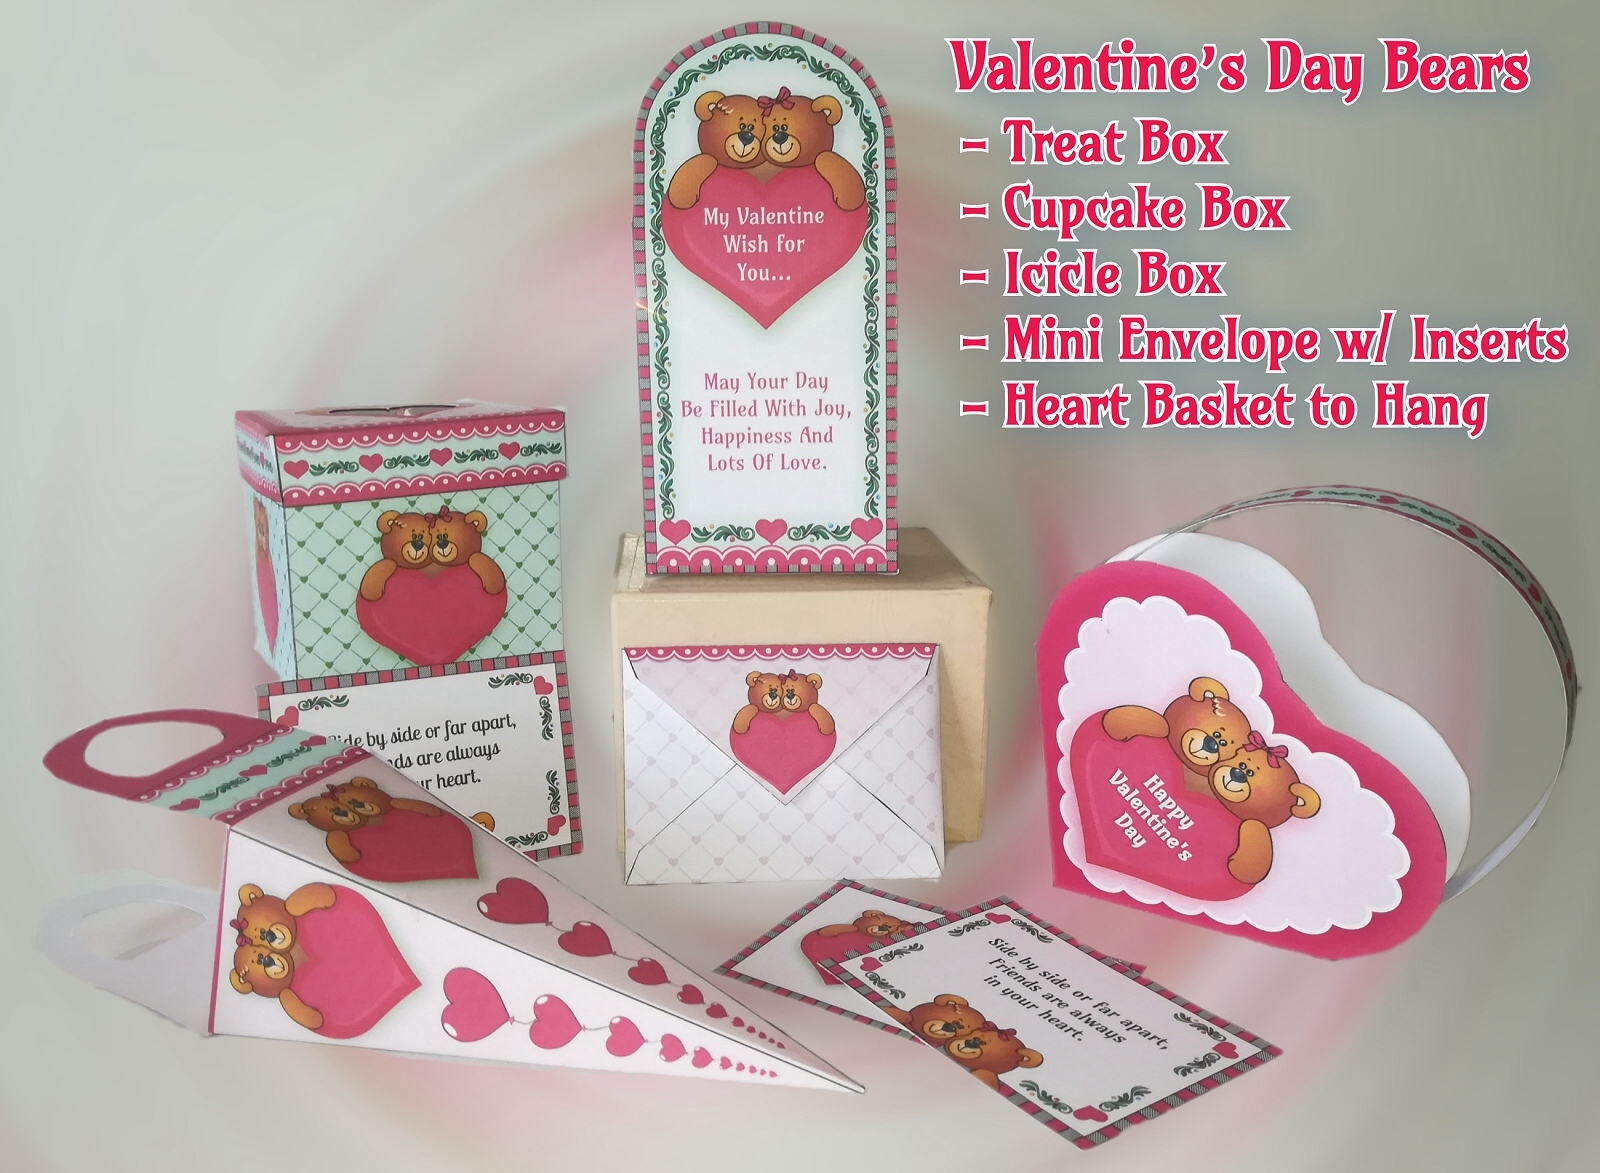 Valentine's Day Bears